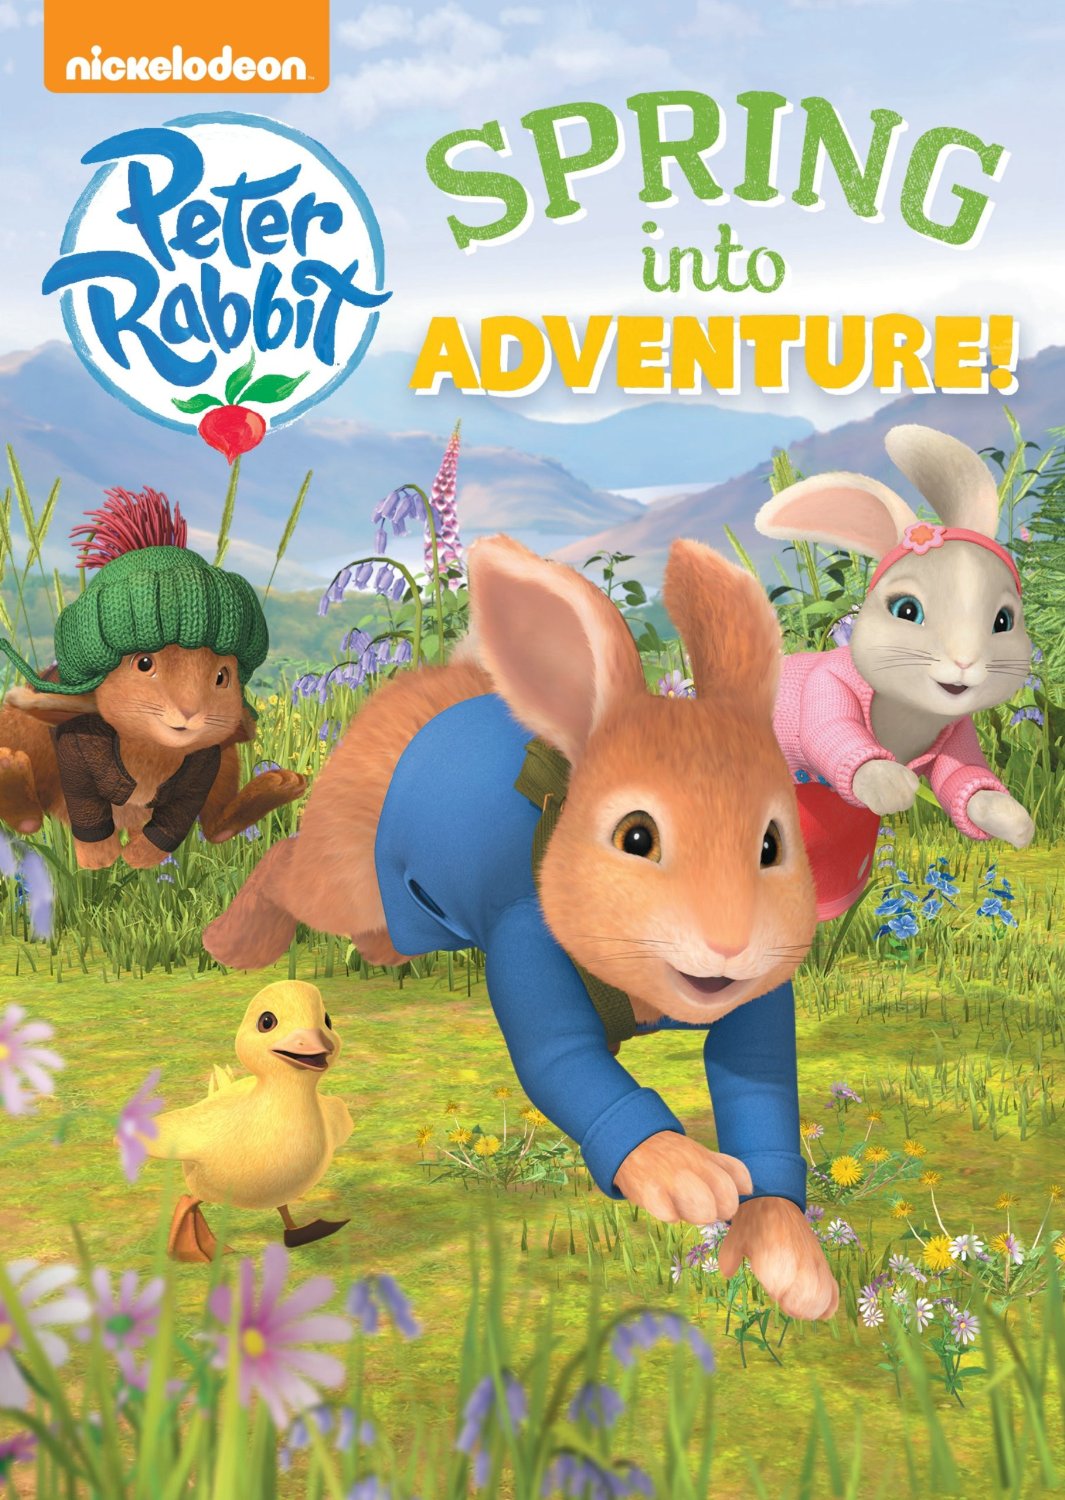 Peter Rabbit (DVD + Digital)